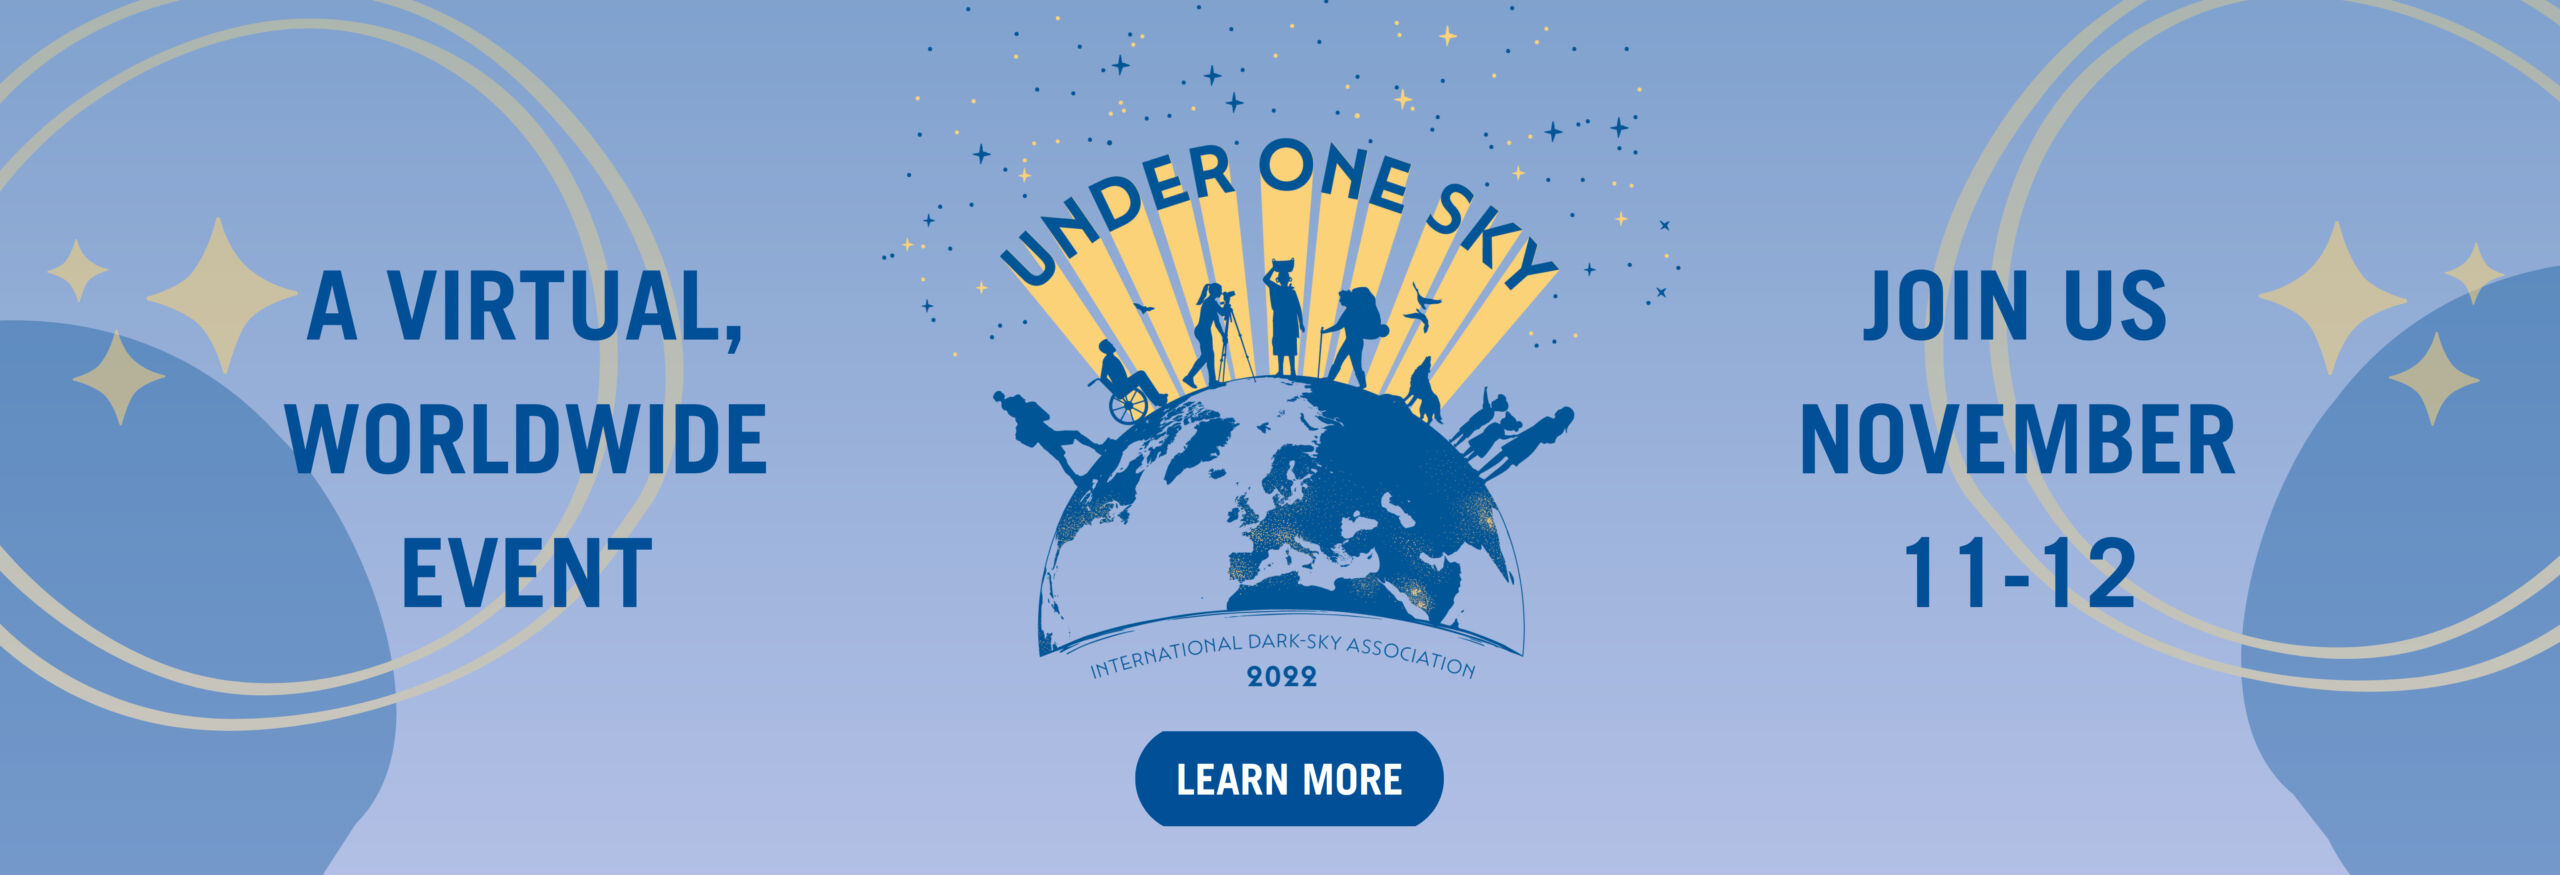 Under One Sky 2022 November 11-12 A Virtual Worldwide Event